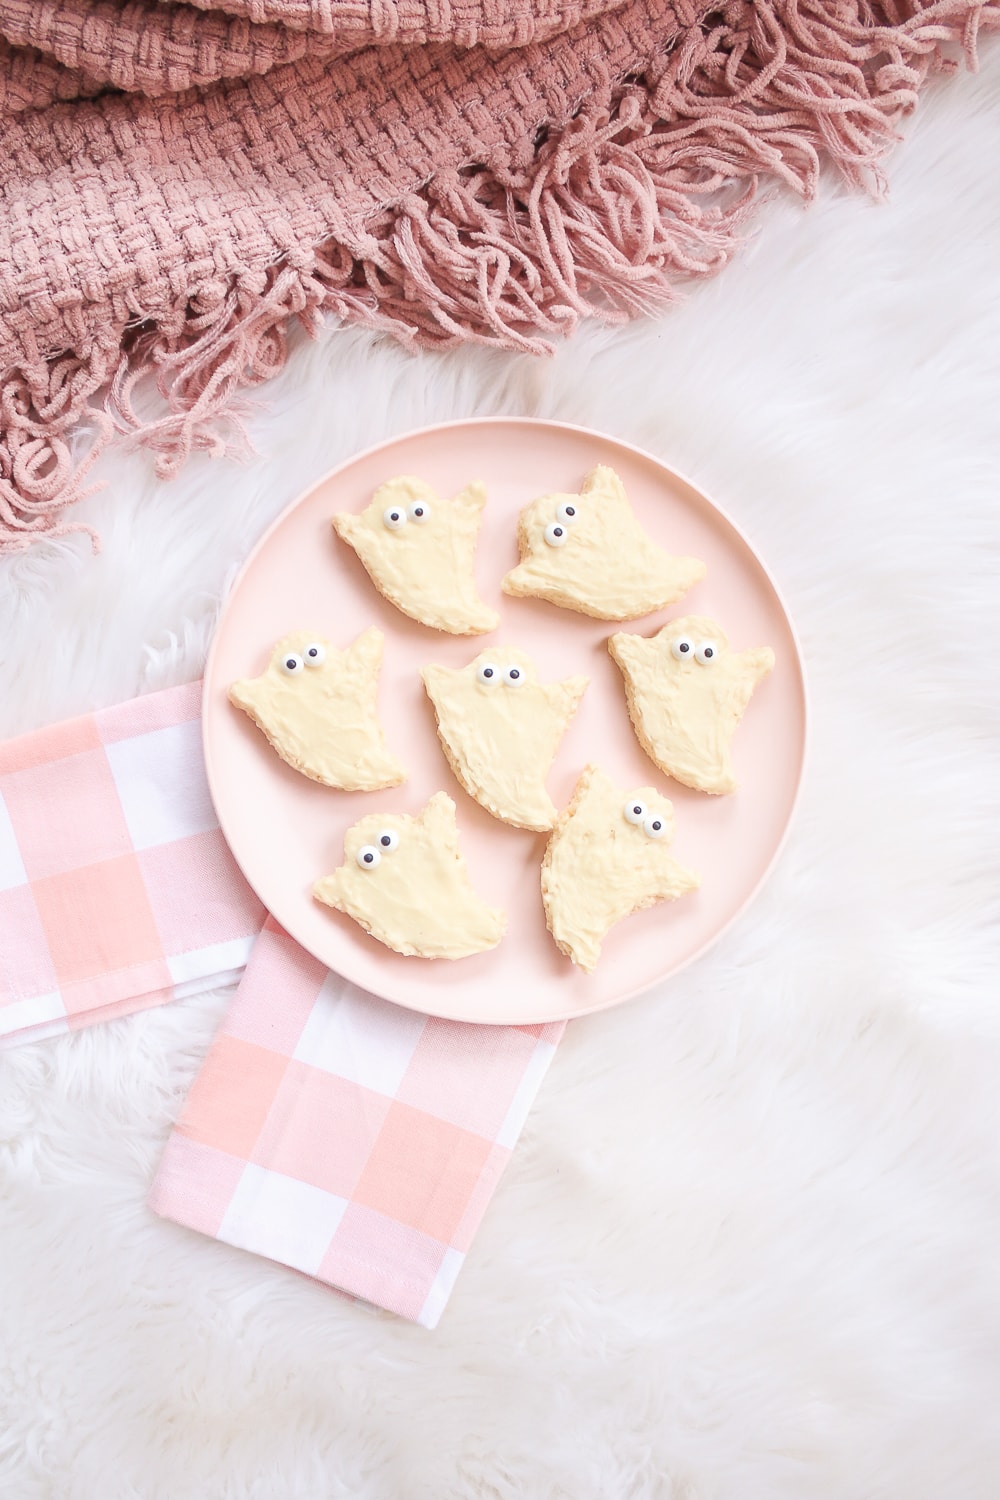 Cute Halloween rice krispie treats ideas by southern blogger Stephanie Ziajka on Diary of a Debutante